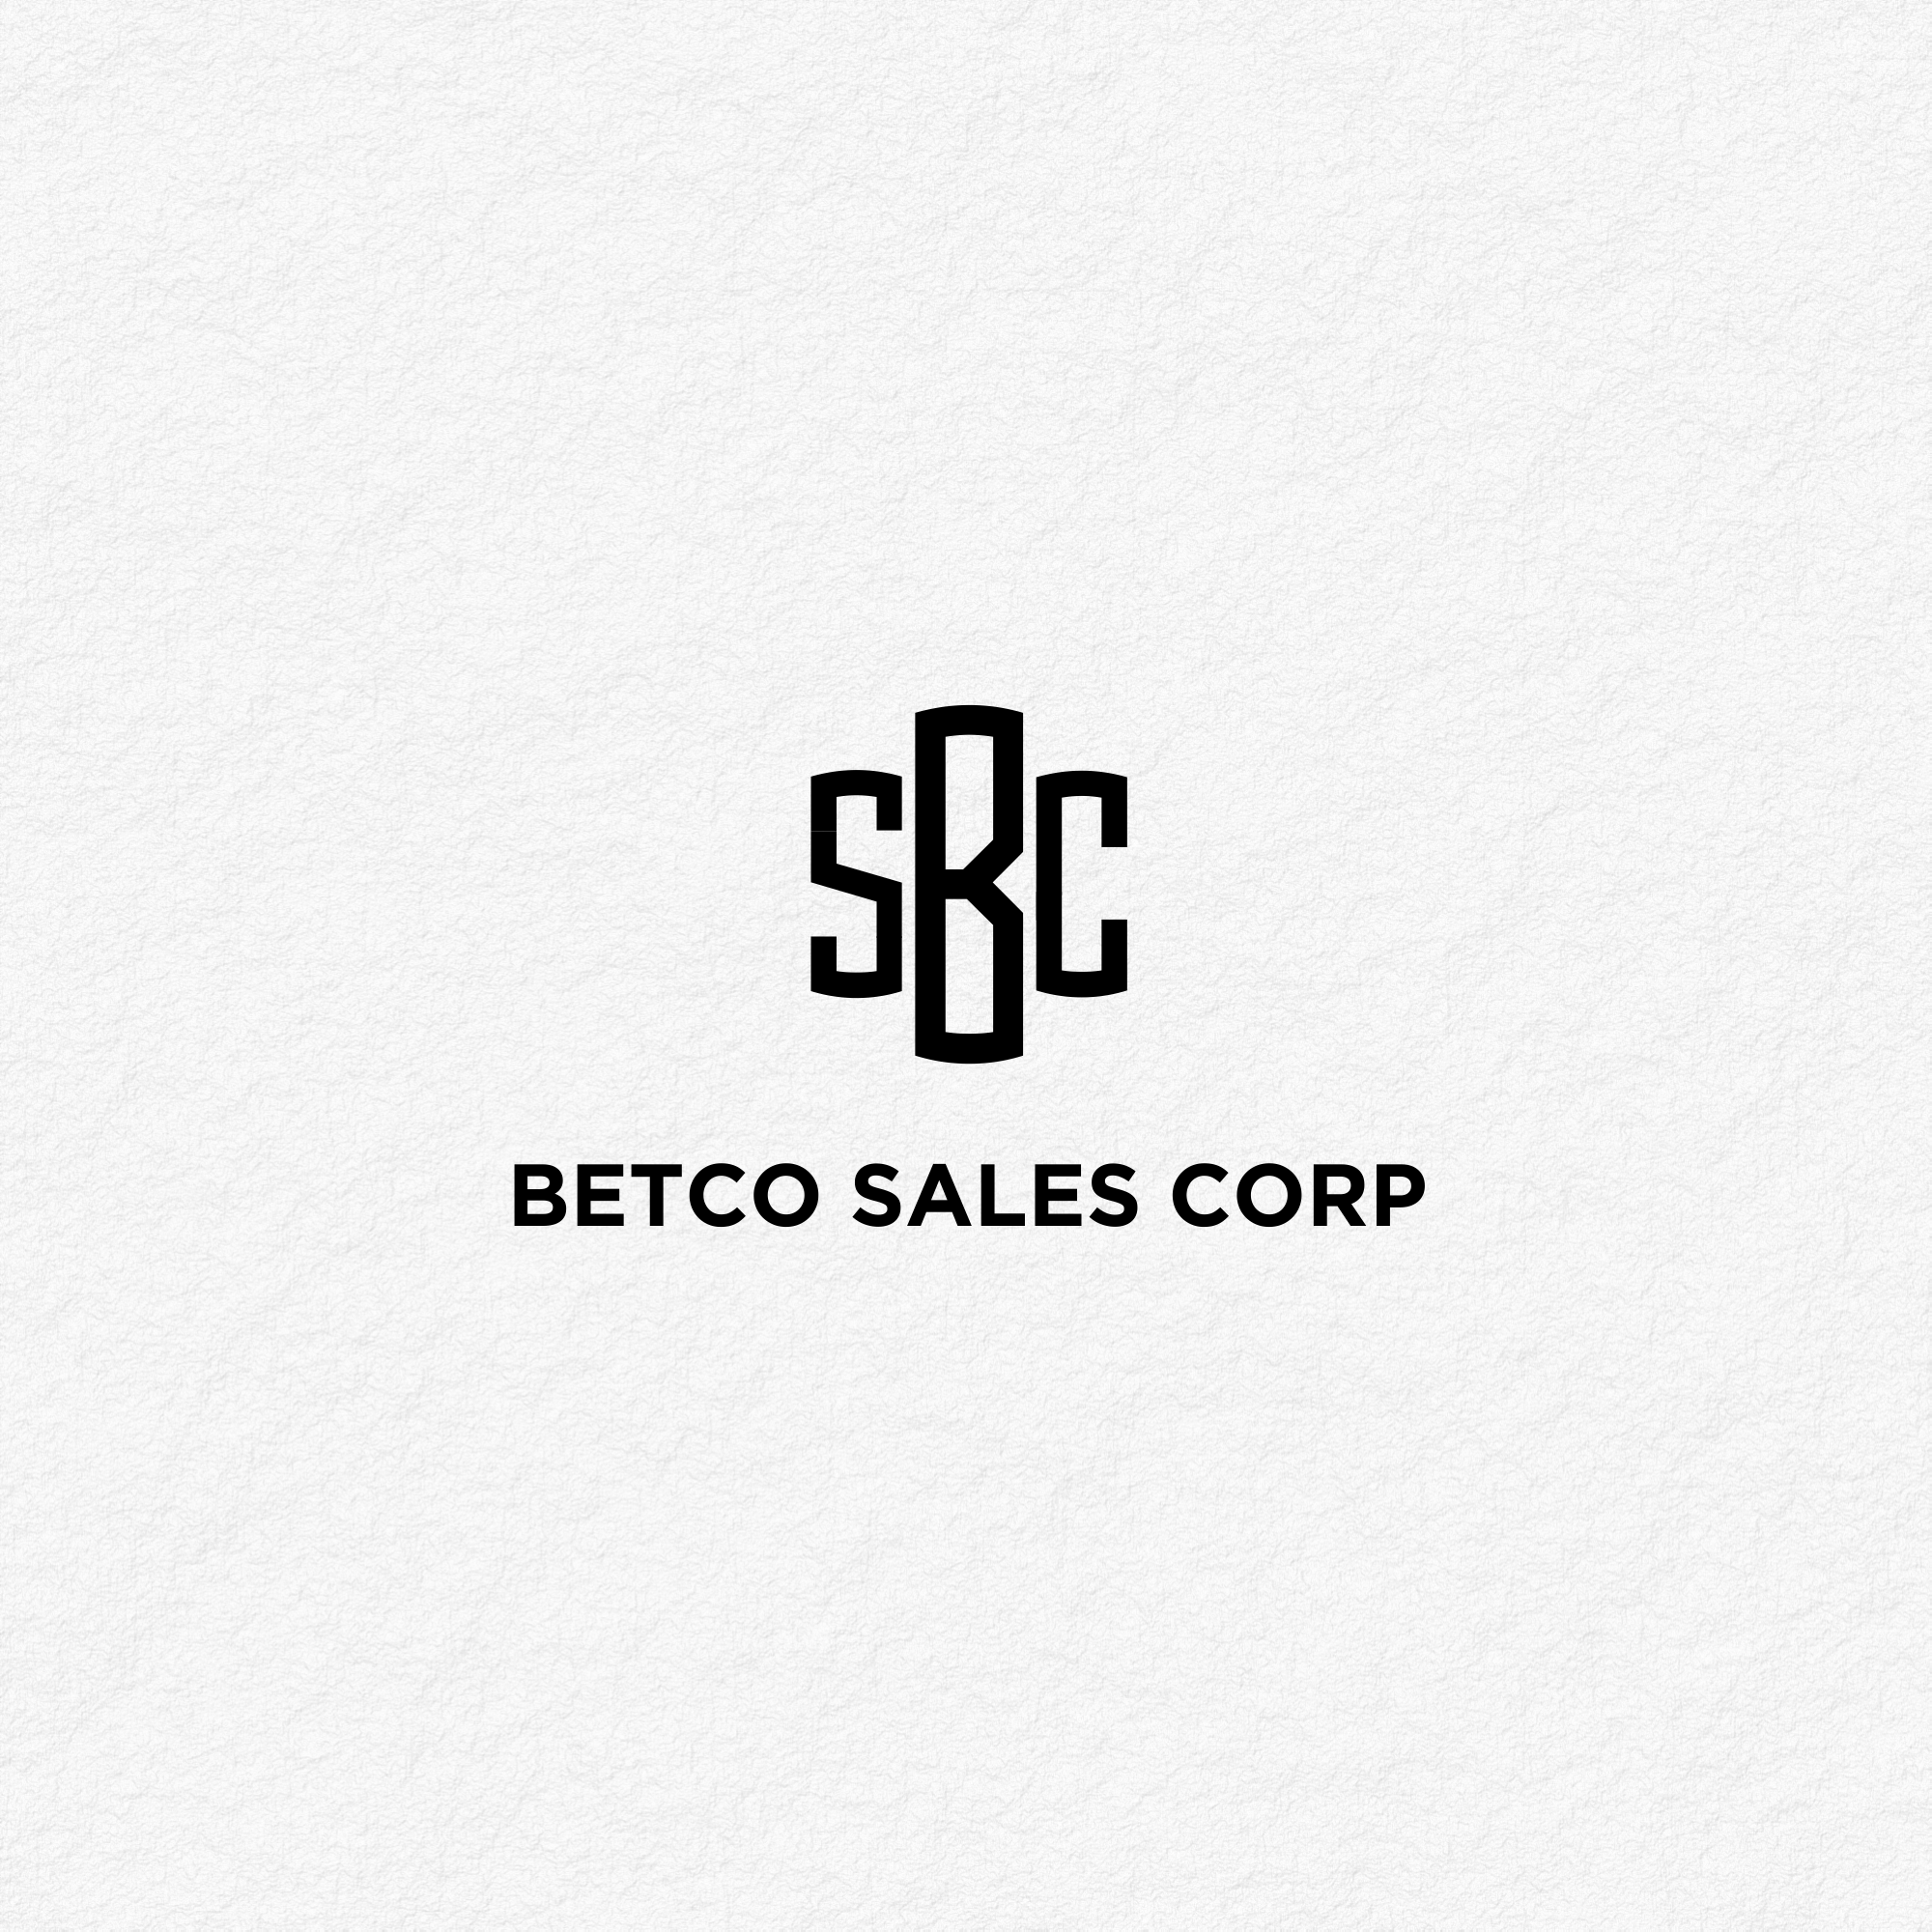 Betco Logo - Logo Design for Betco Sales Corp by sabro | art | Design #21914841